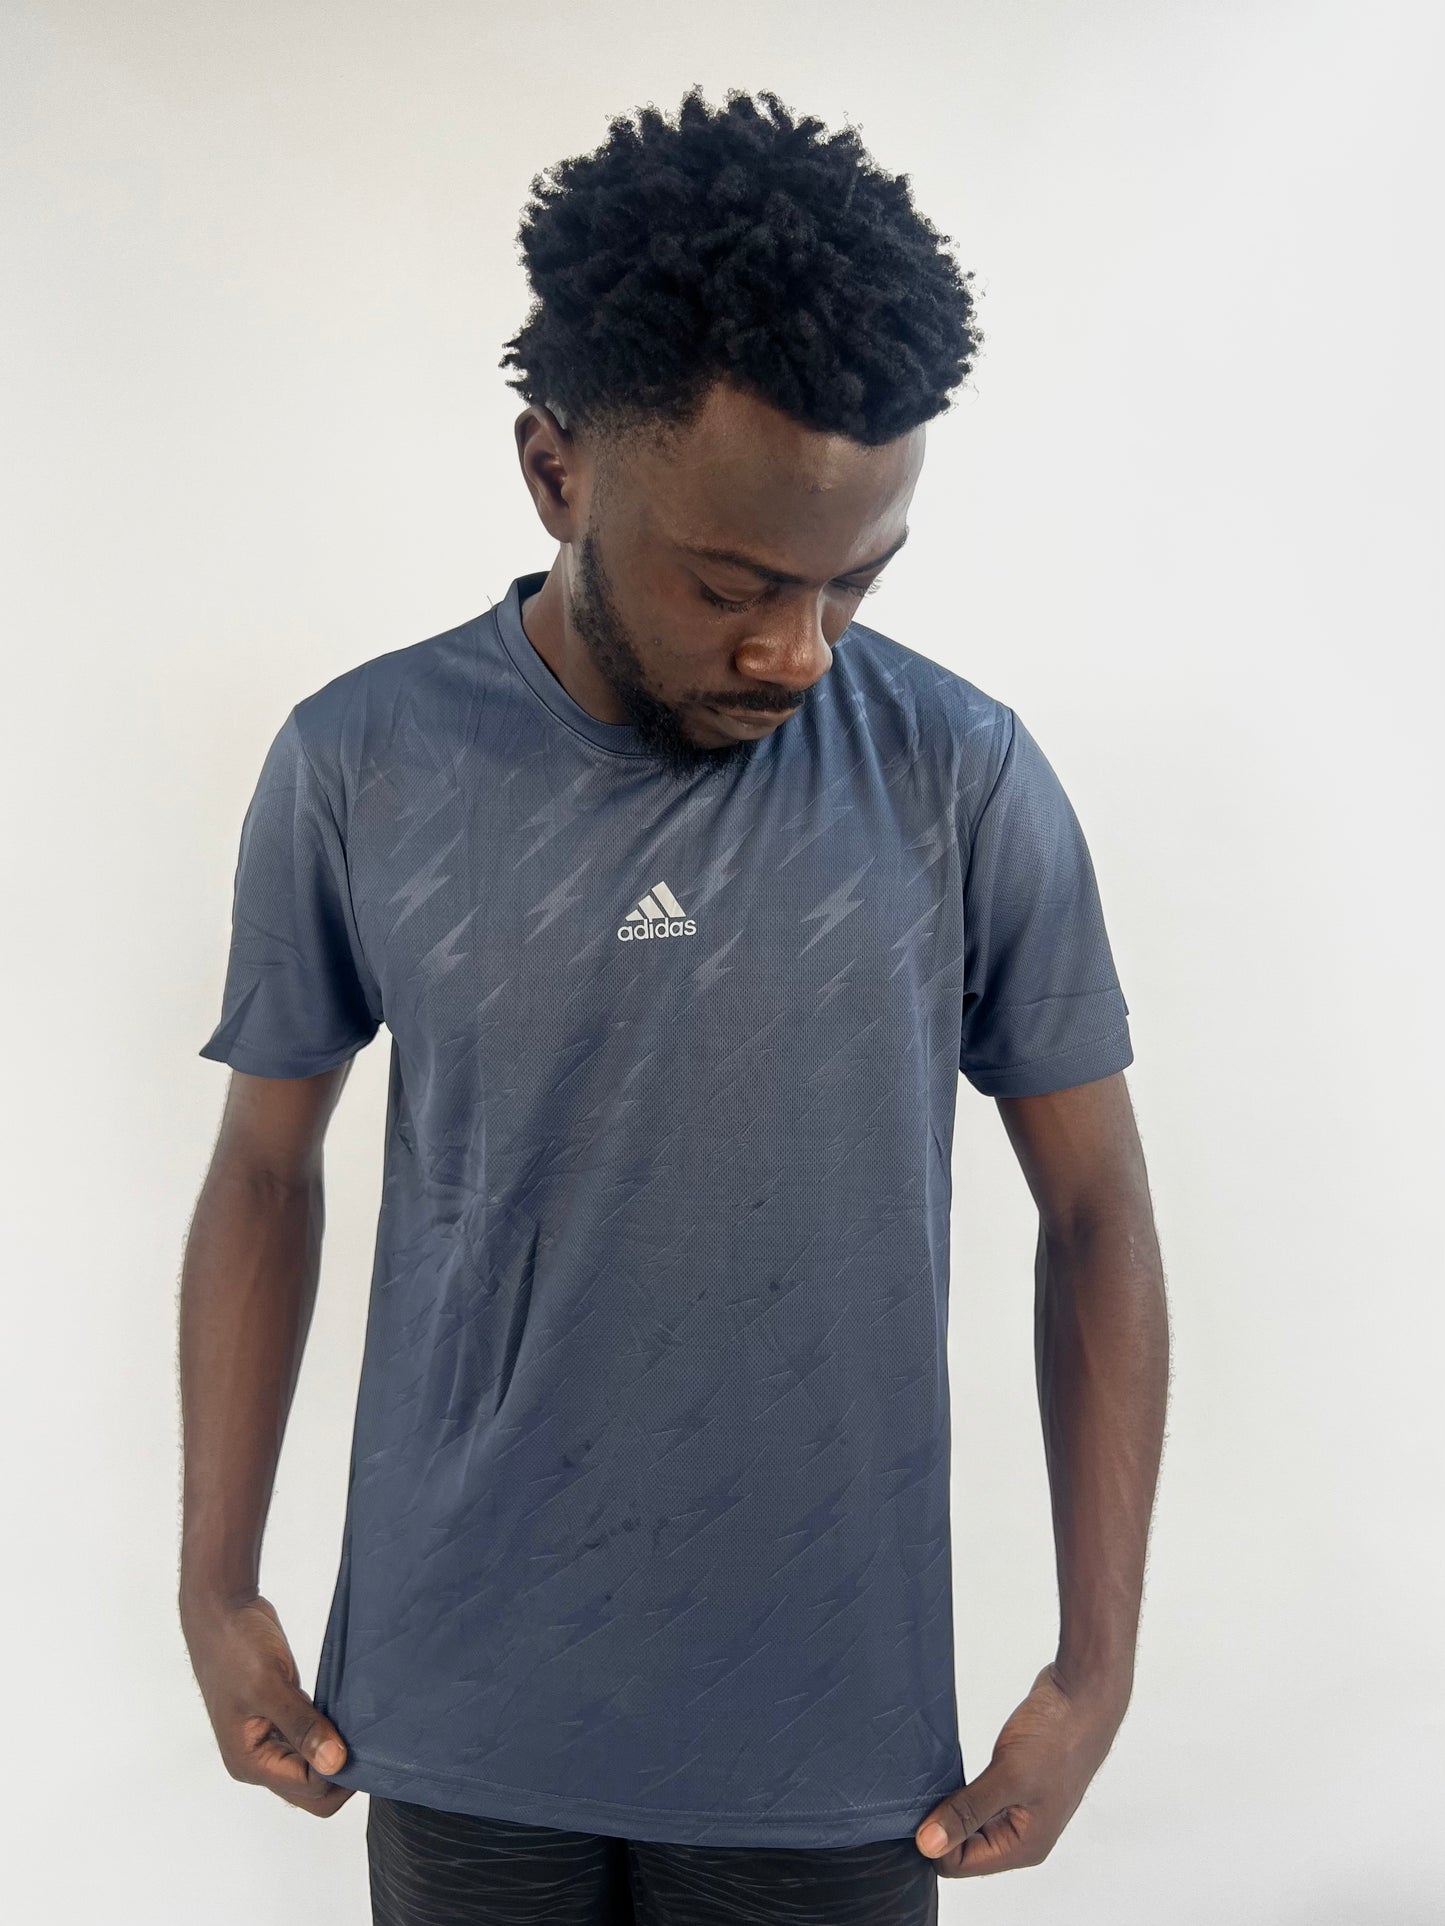 Adidas lightning print sports t-shirt in grey